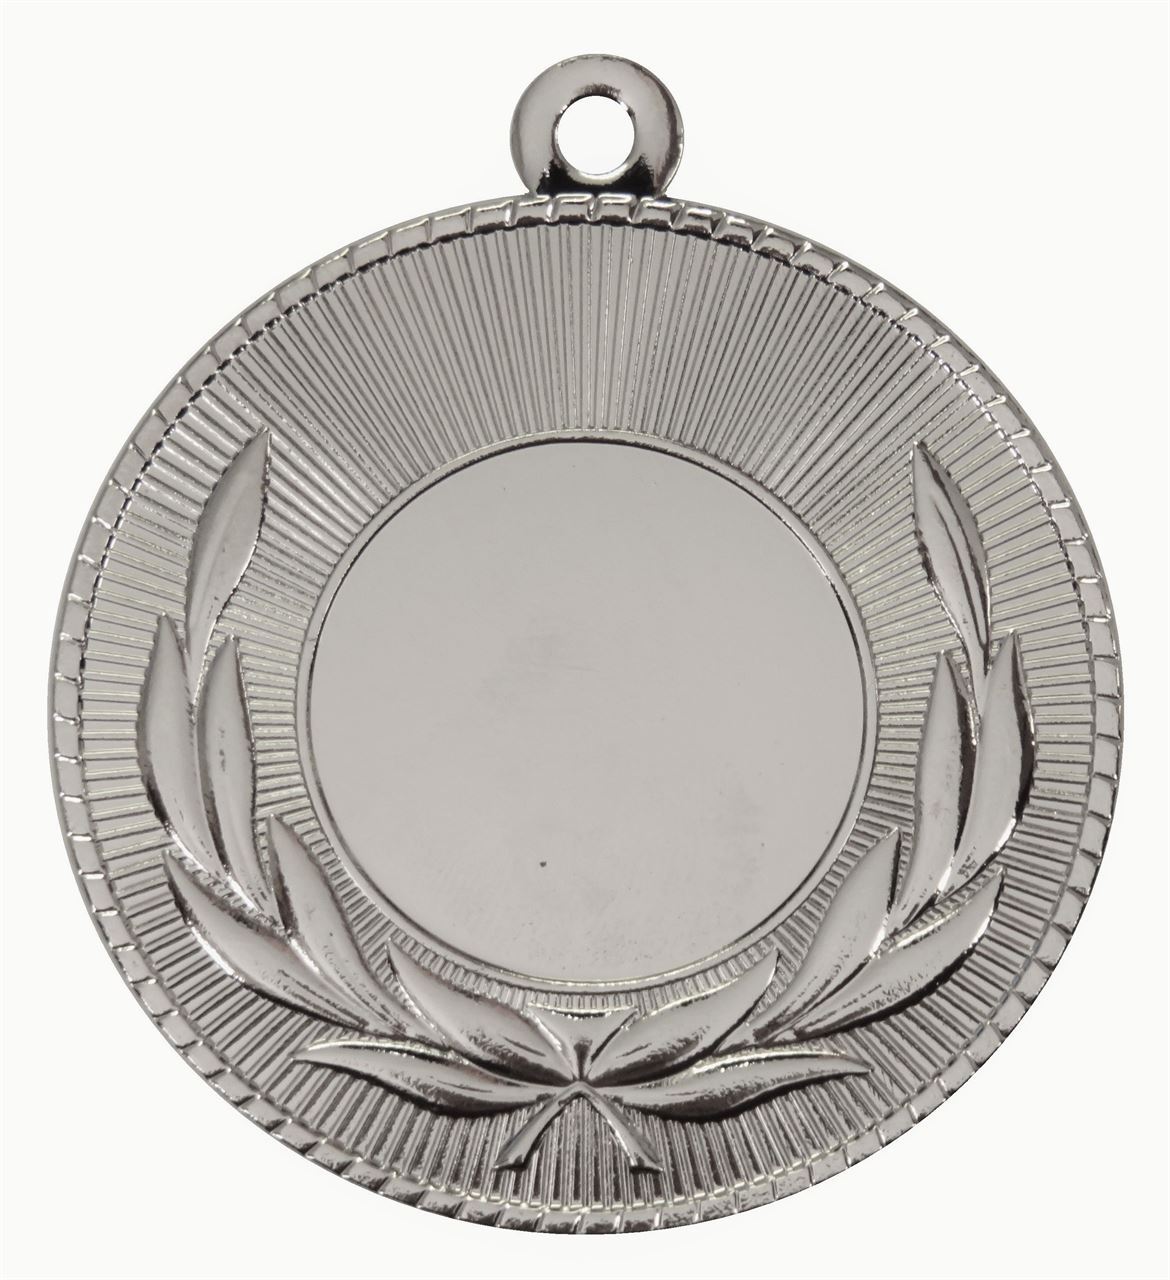 Silver Economy Laurel Wreath Medal (size: 50mm) - 7007